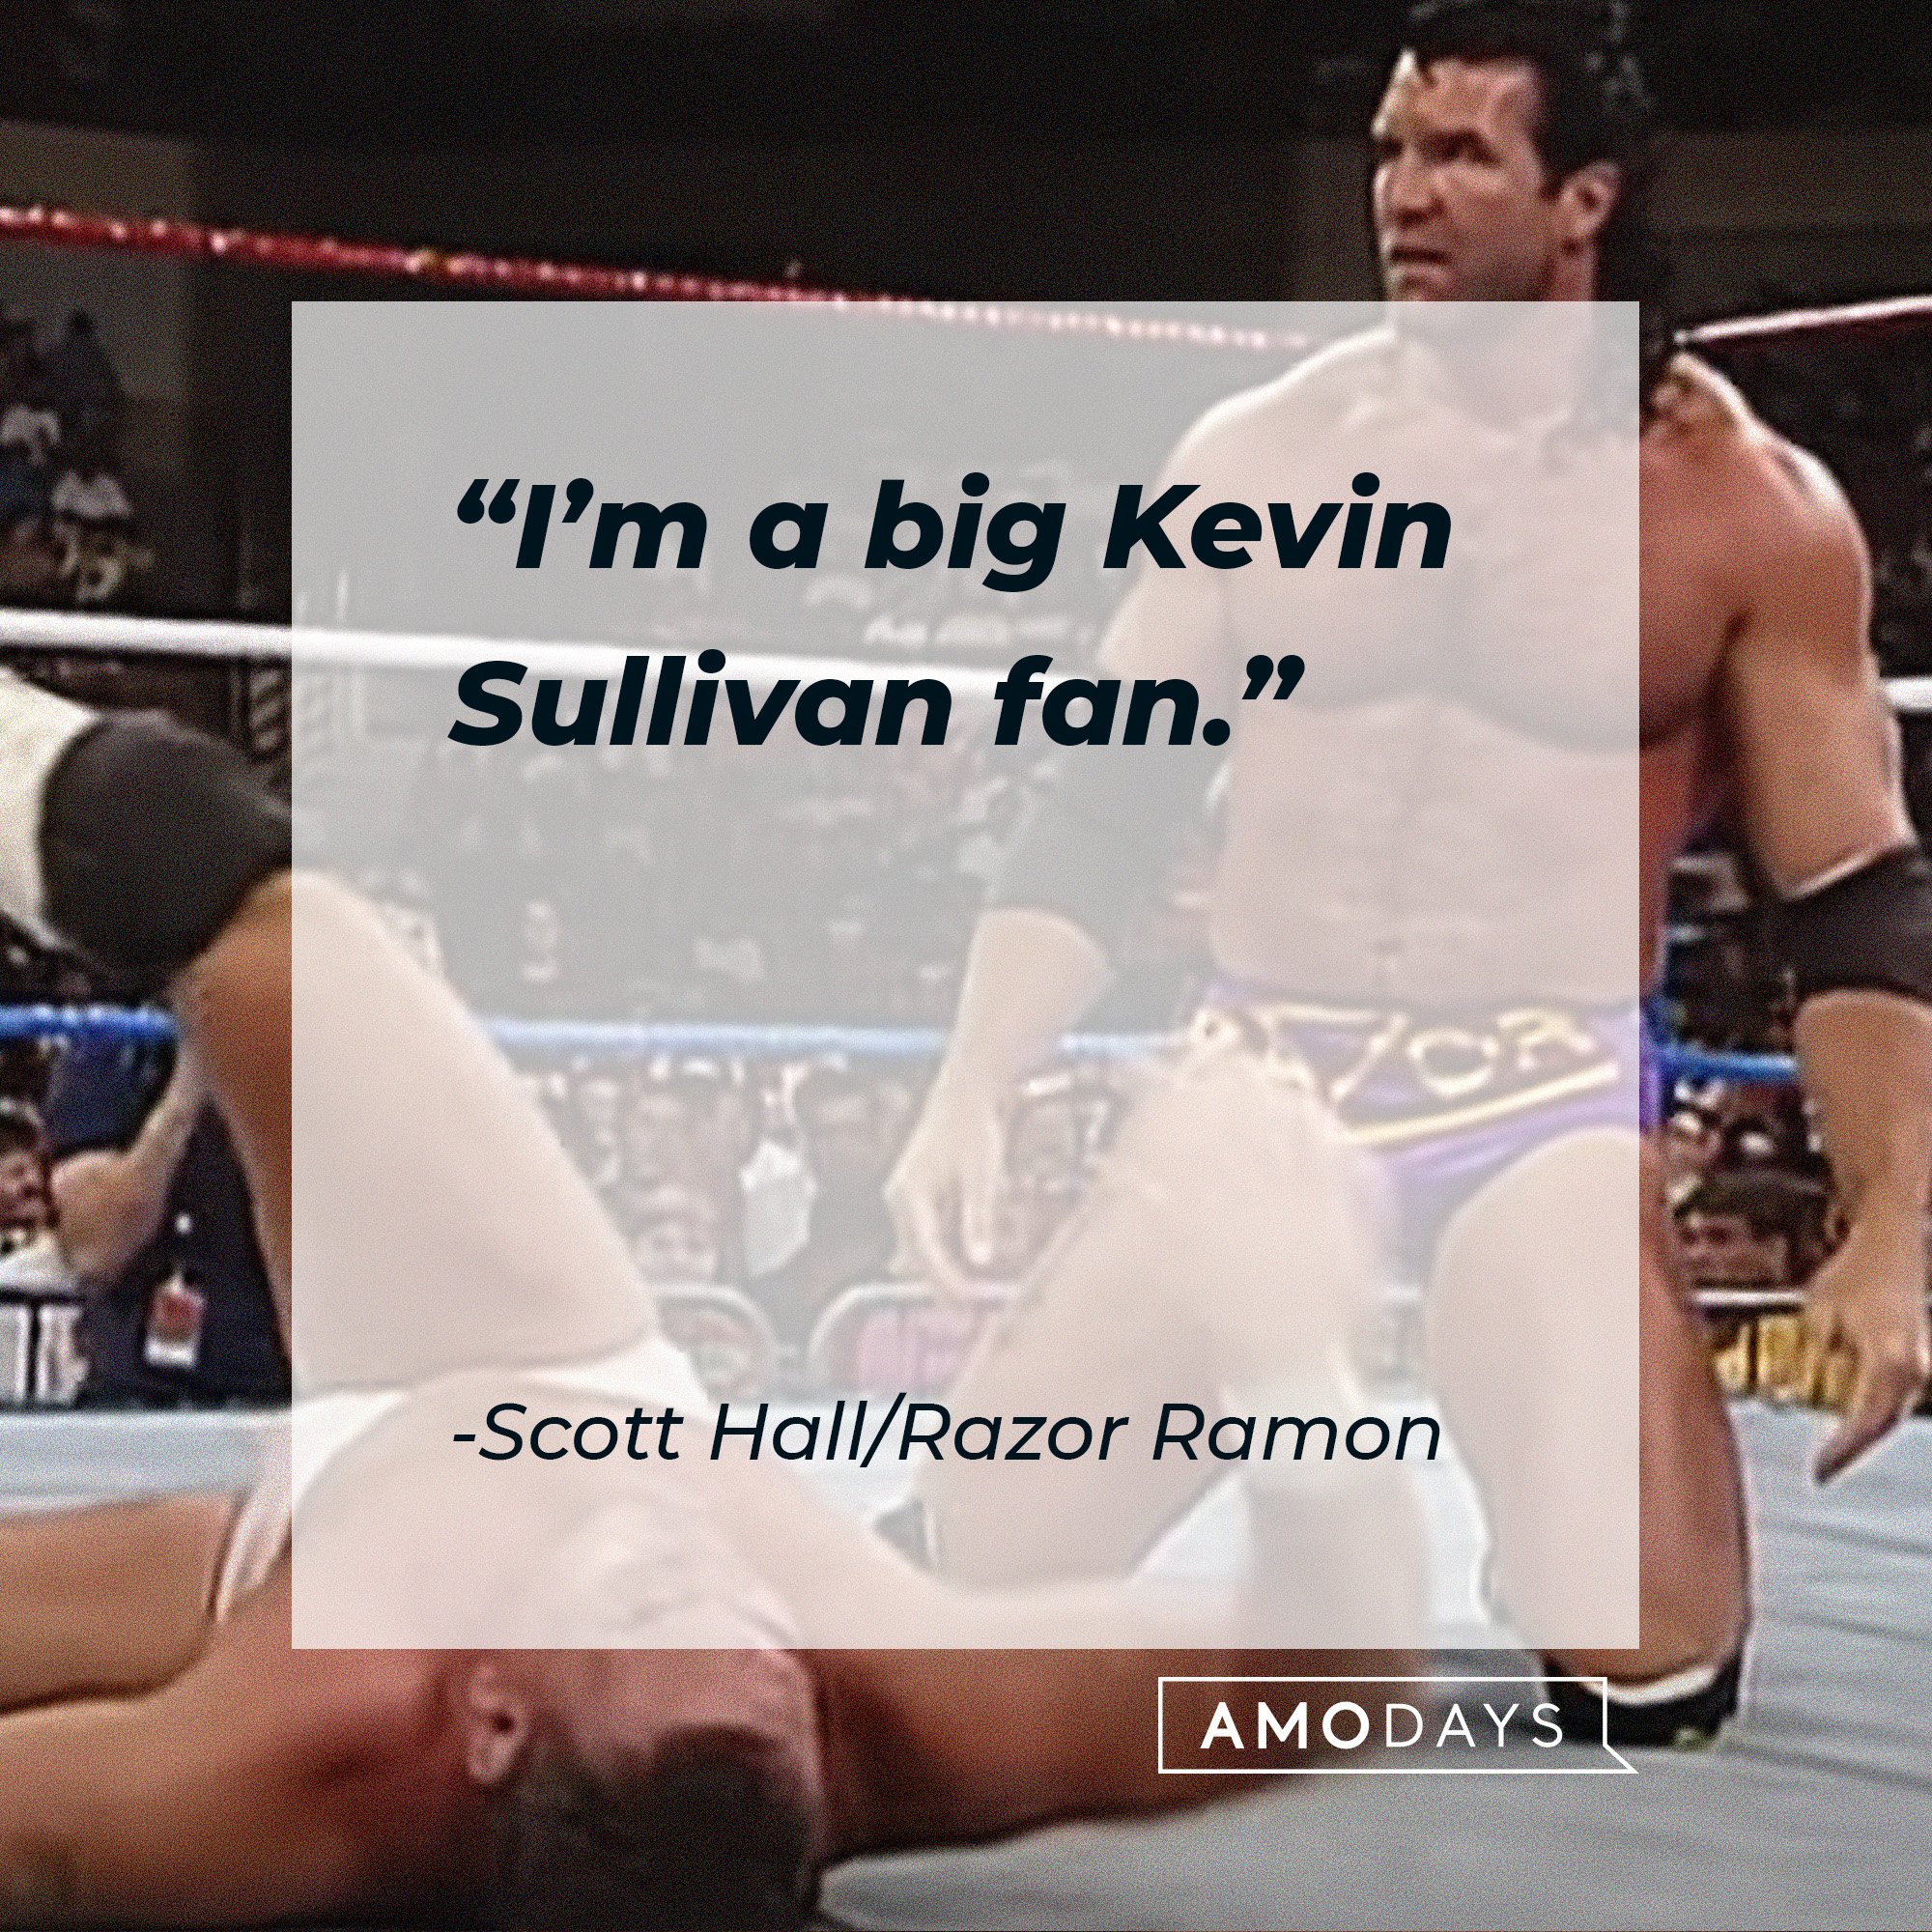 Scott Hall/Razor Ramon’s quote: “I’m a big Kevin Sullivan fan.” | Image: AmoDays